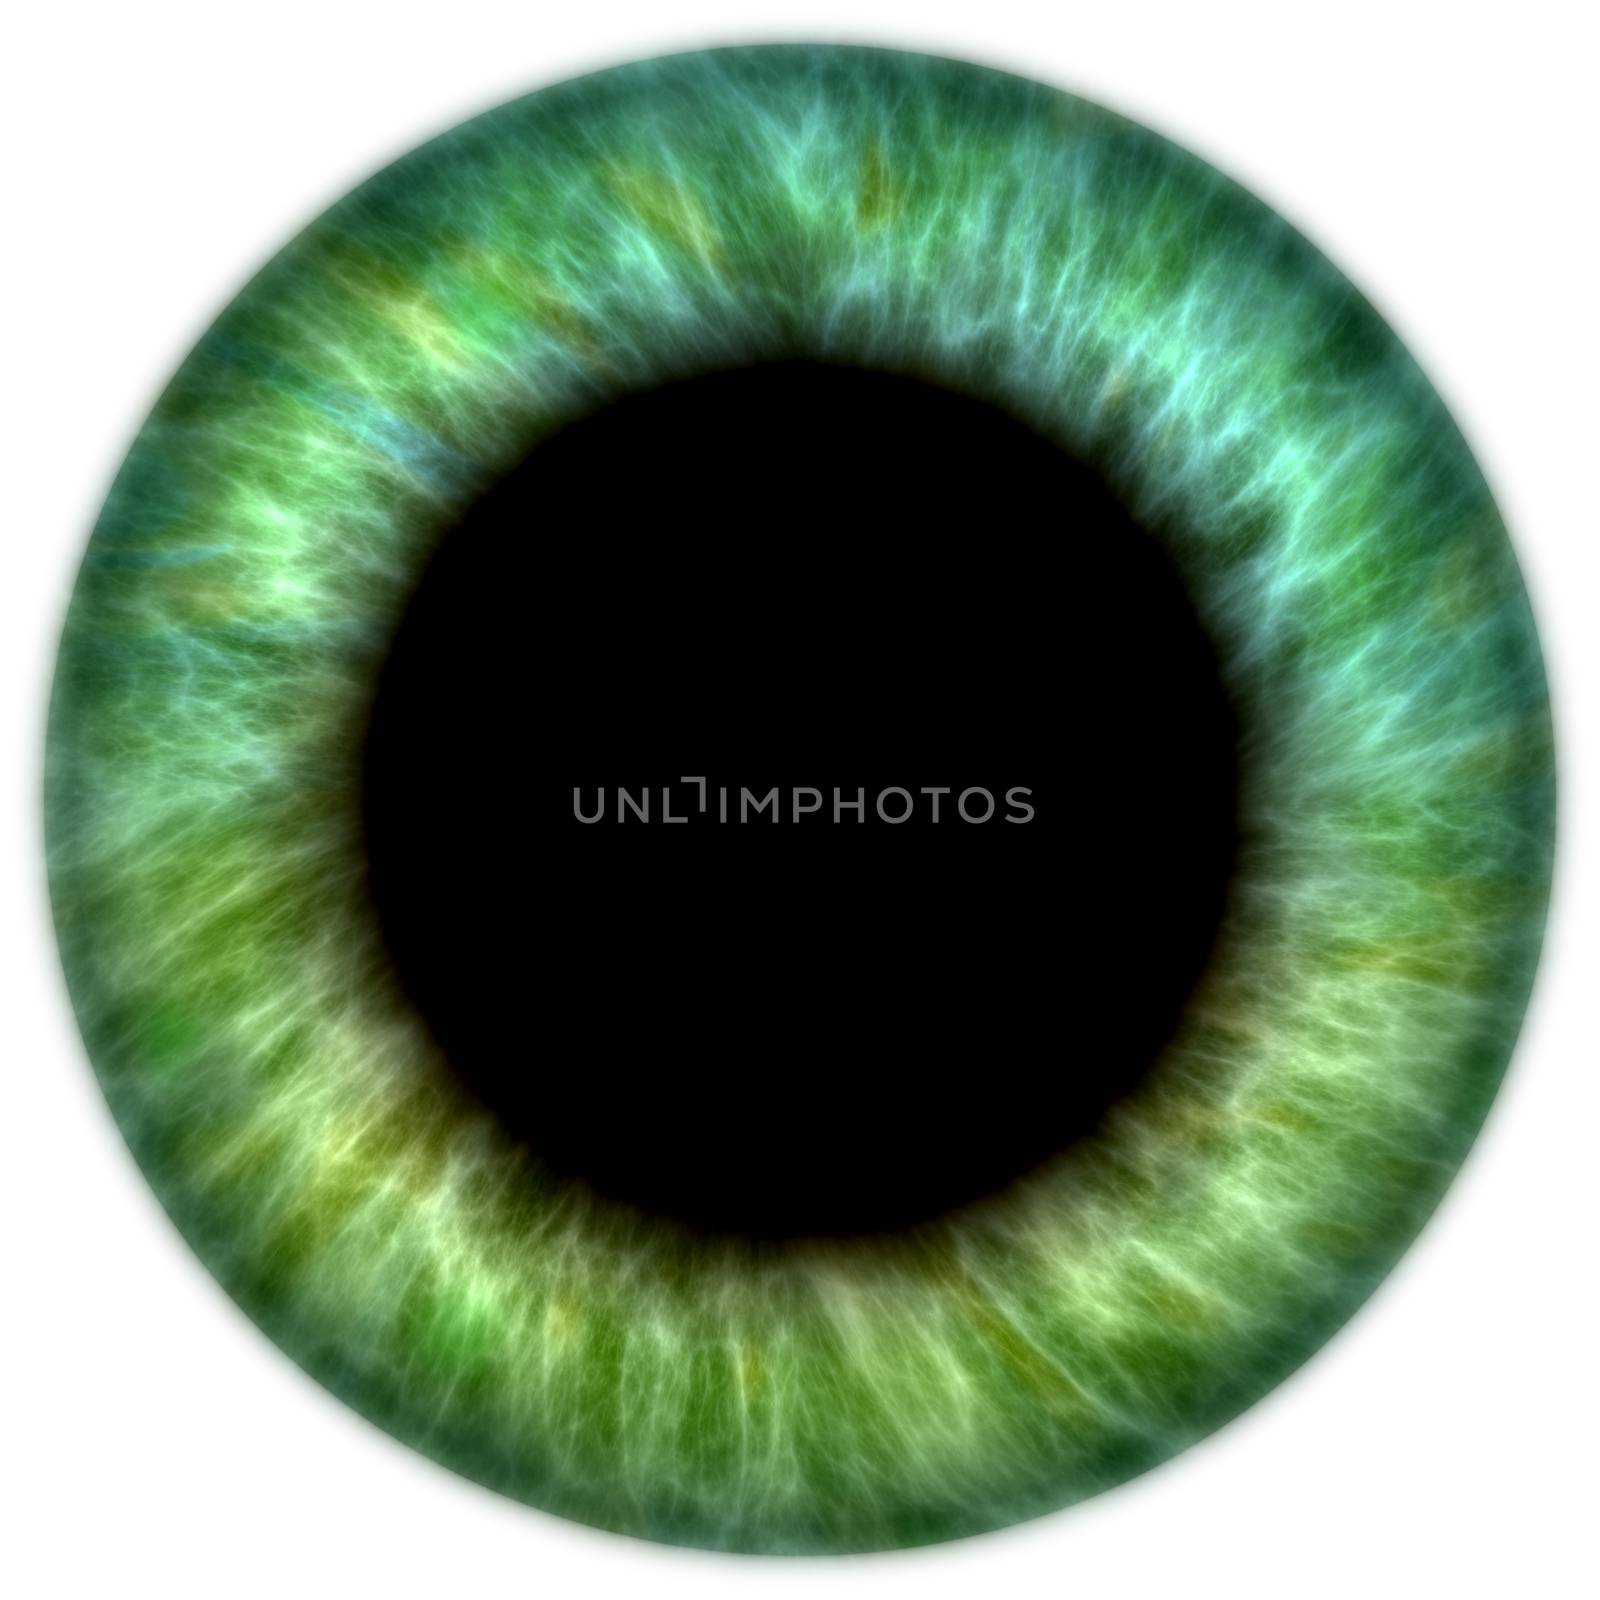 Illustration of a green human iris